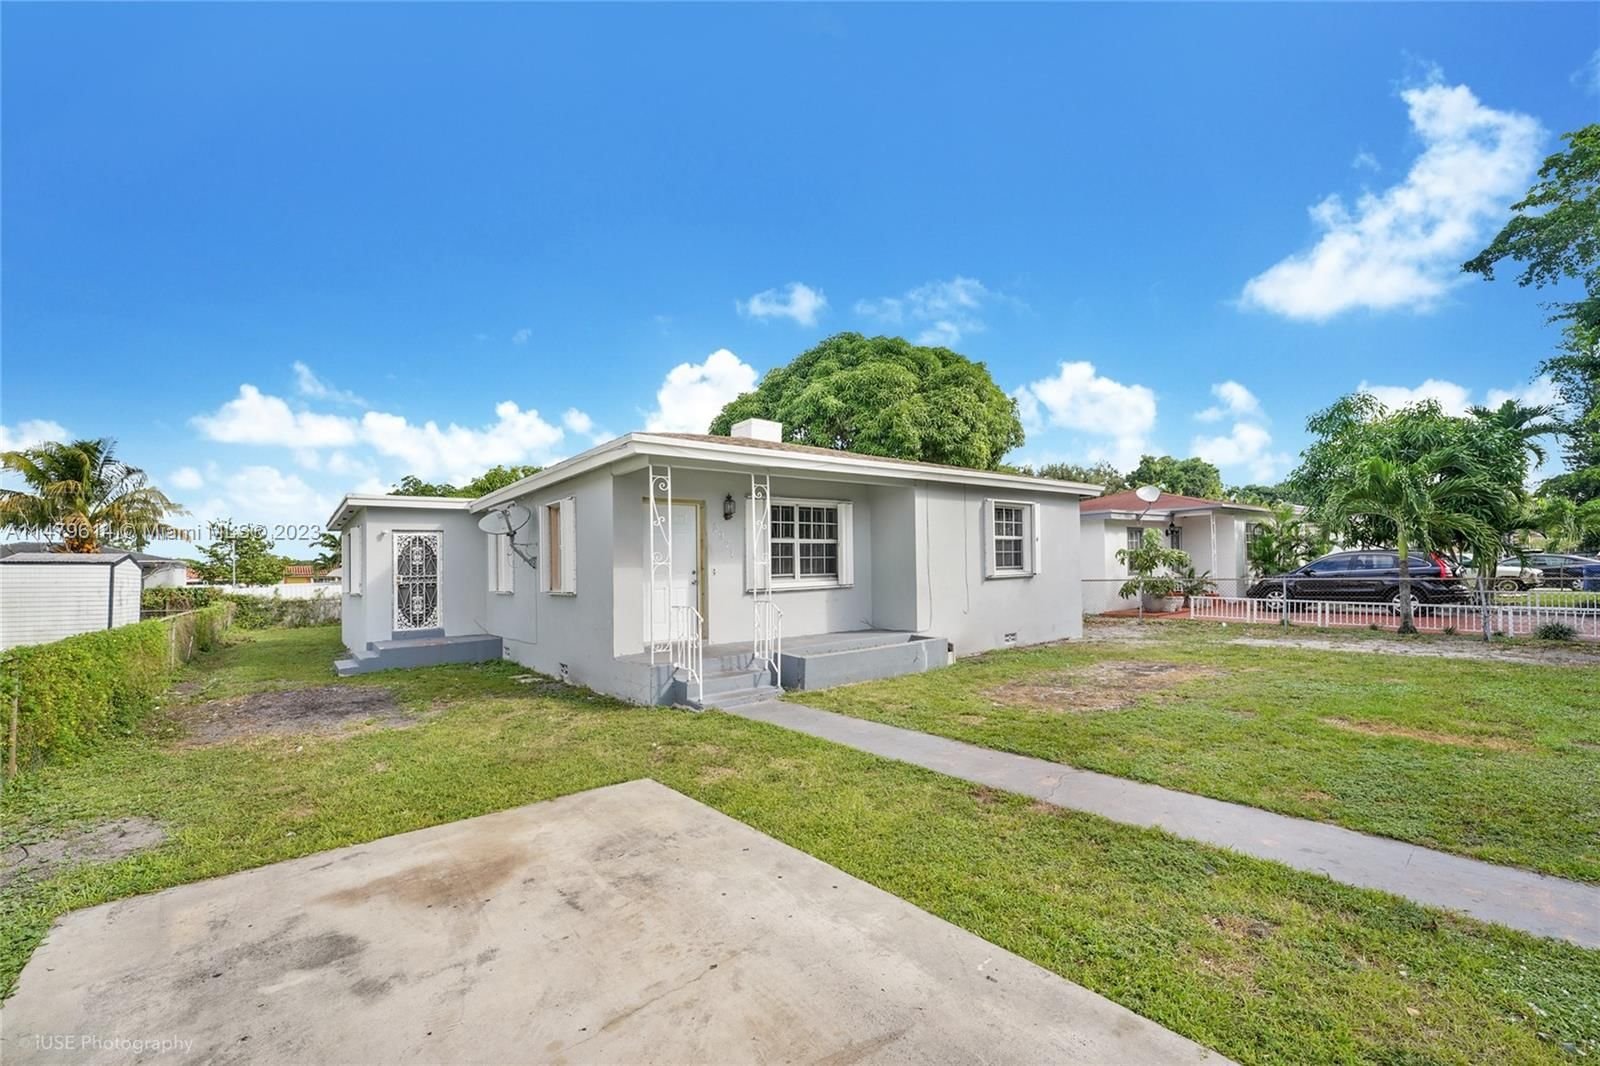 Real estate property located at 2971 66th St, Miami-Dade County, MARILYNDA, Miami, FL